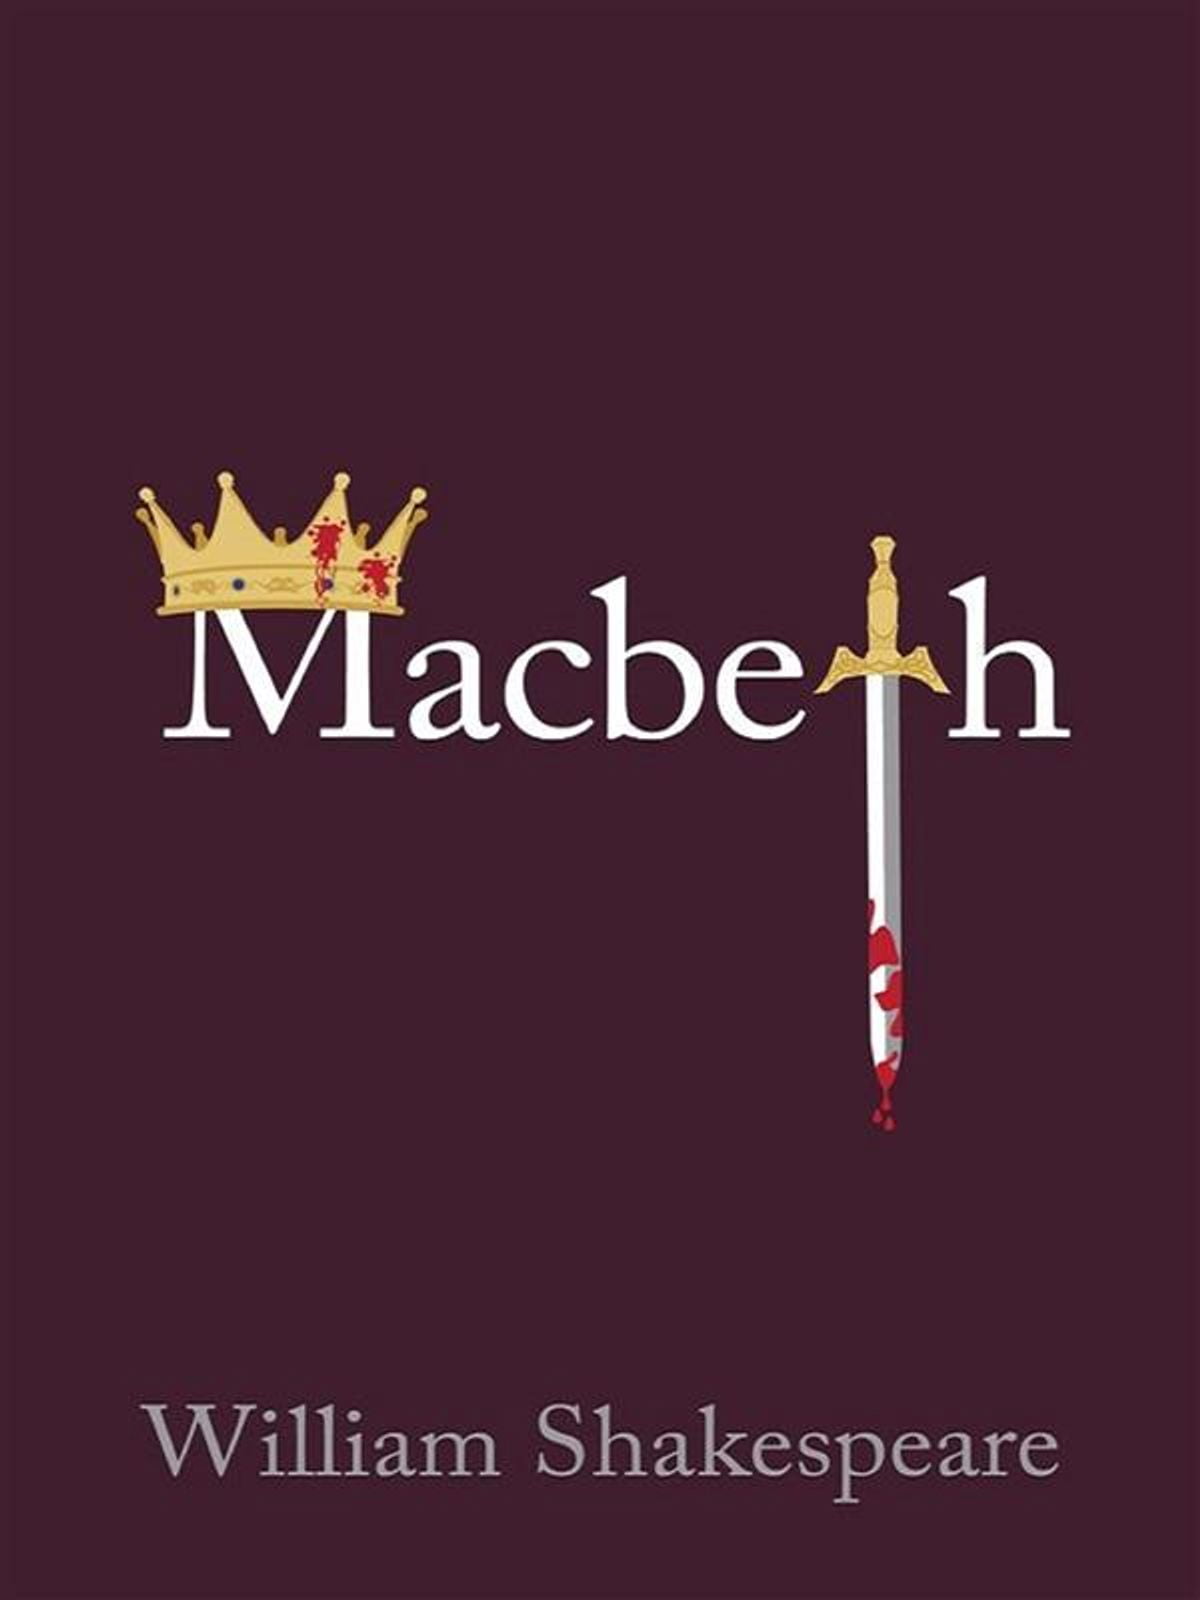 william shakespeare macbeth book review